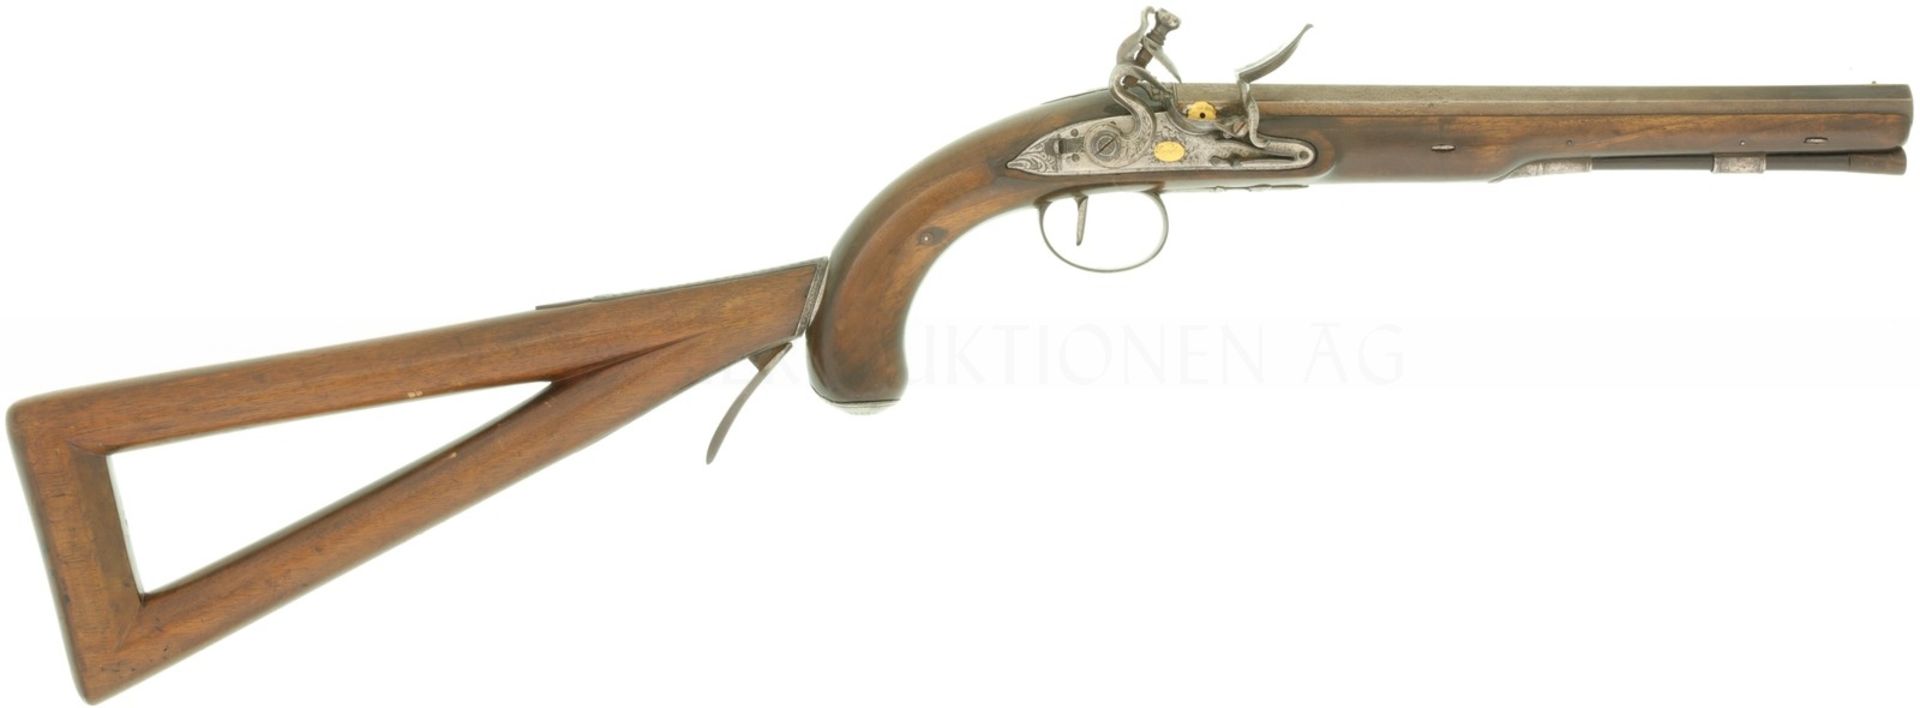 Steinschloss-Jagdpistole mit abnehmbarem Kolben, Wogdon London, Kal. 13mm - Image 2 of 9